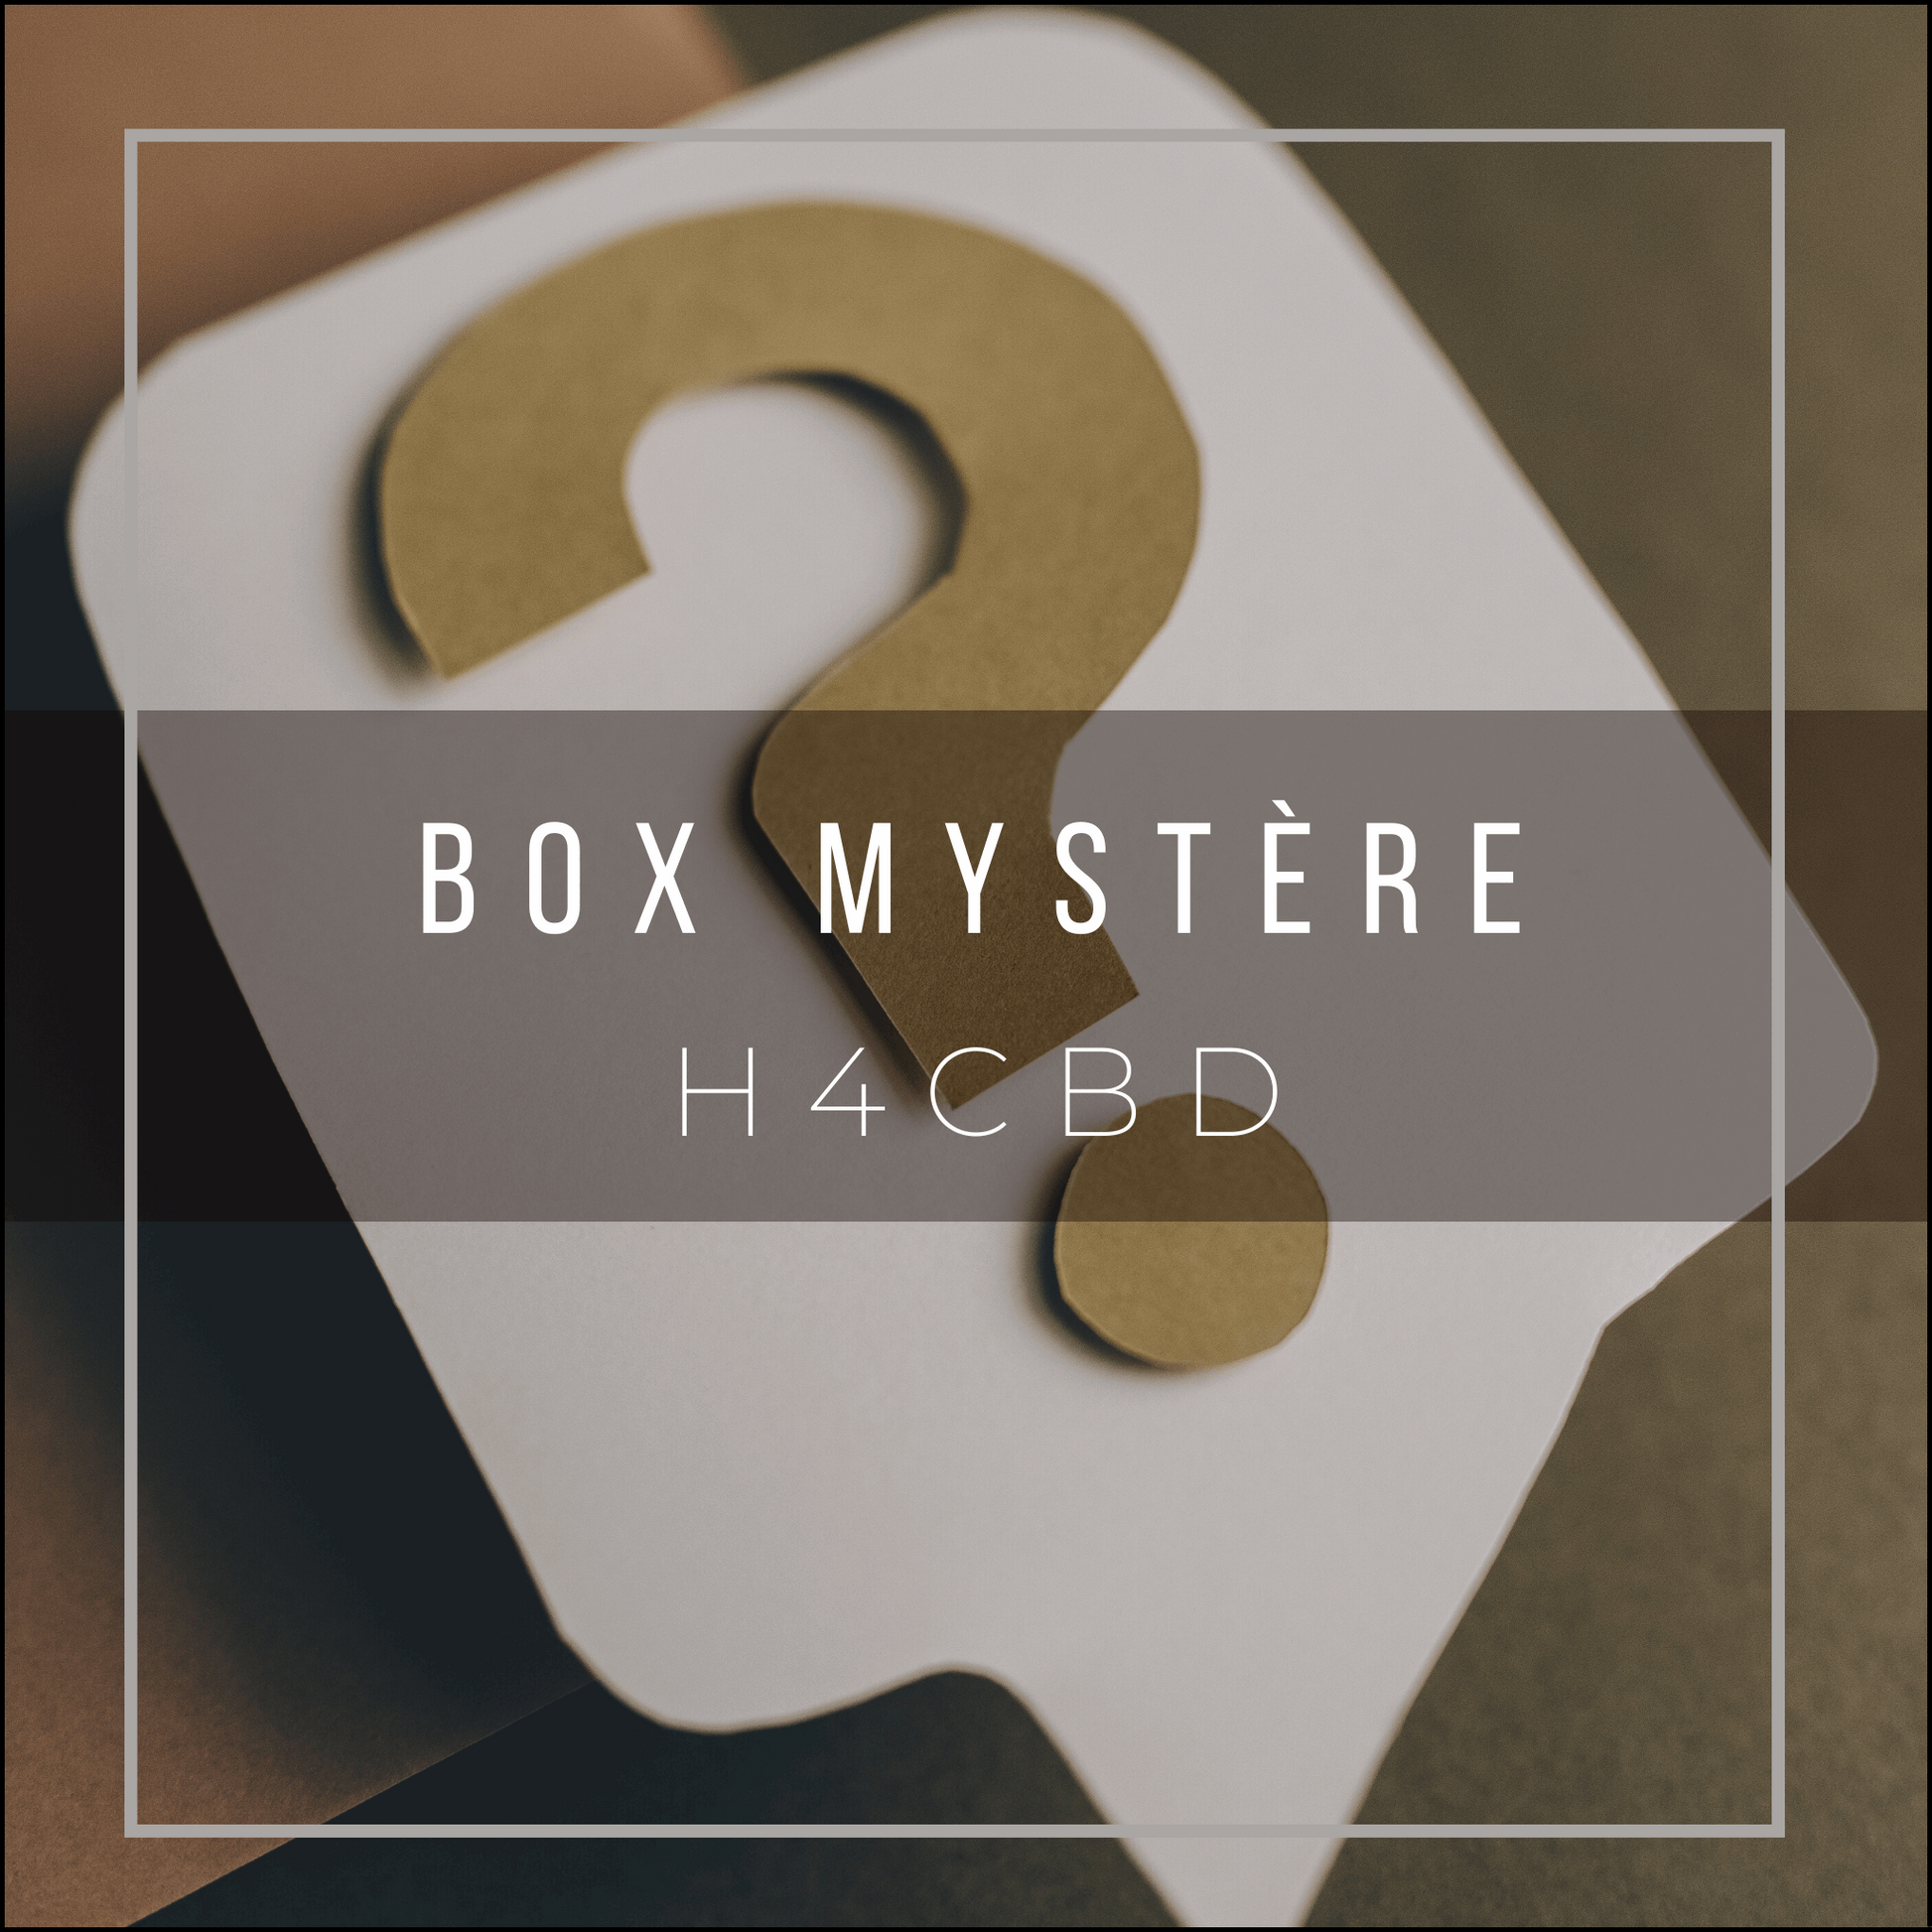 Box mystère H4CBD